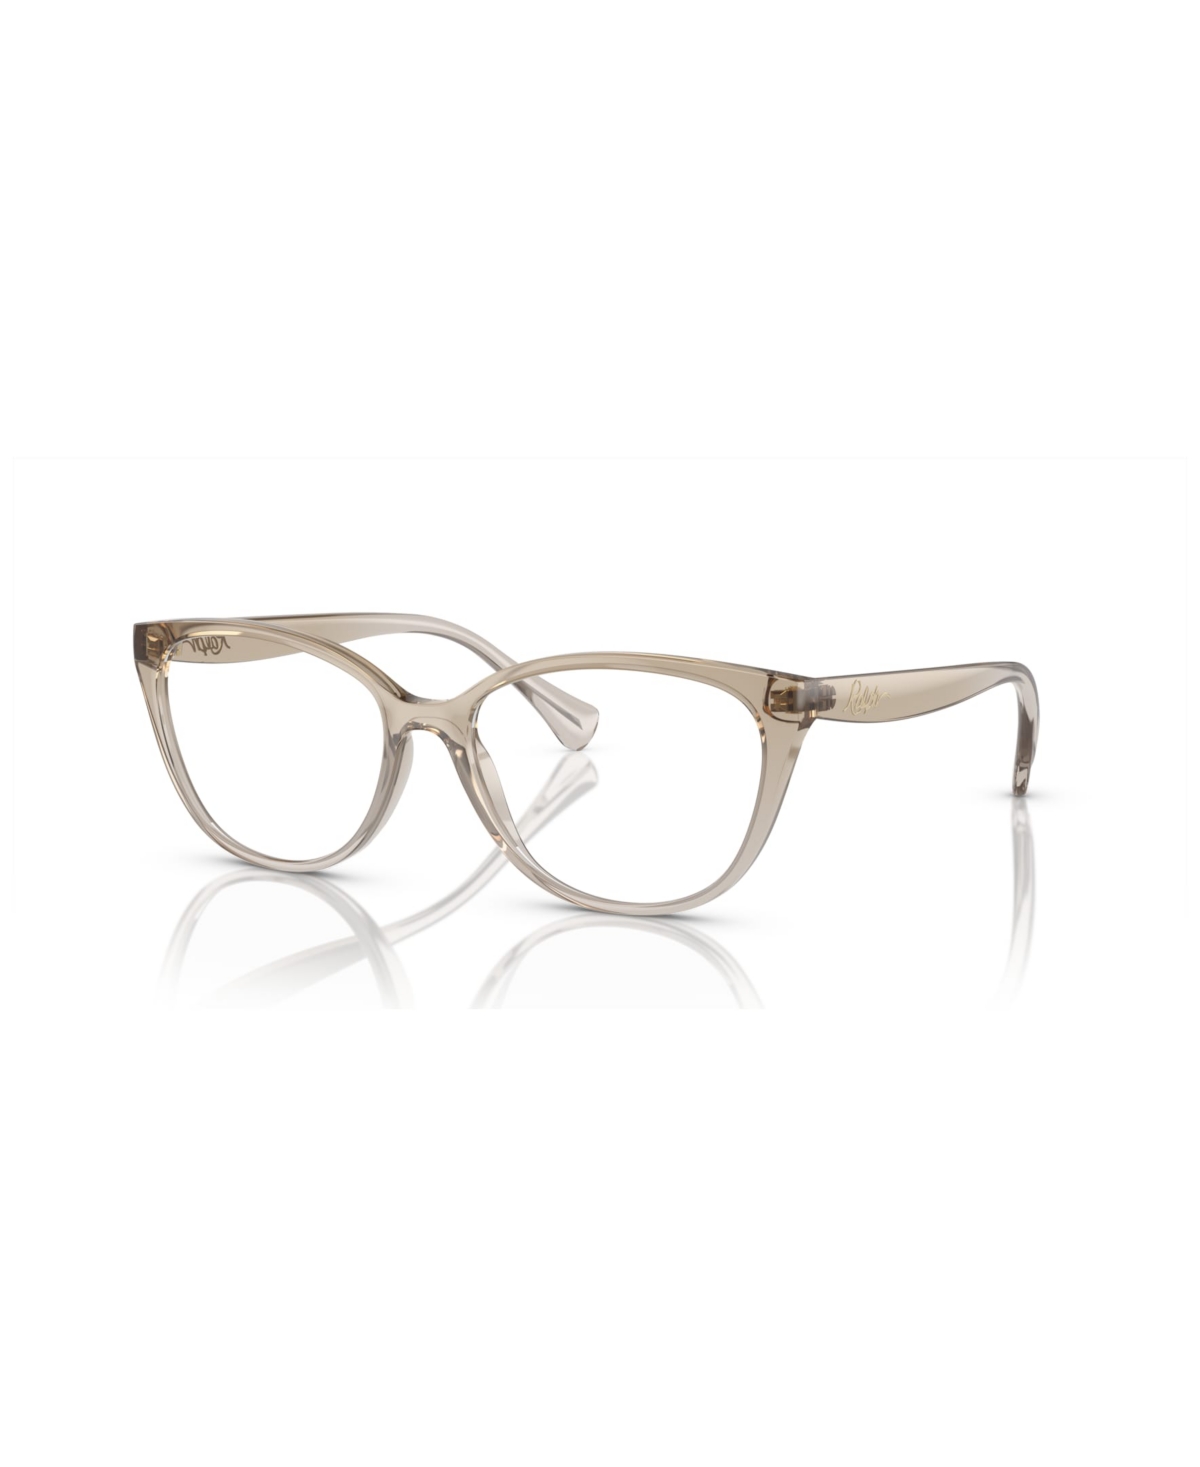 Women's Eyeglasses, RA7135 - Shiny Trasparent Brown